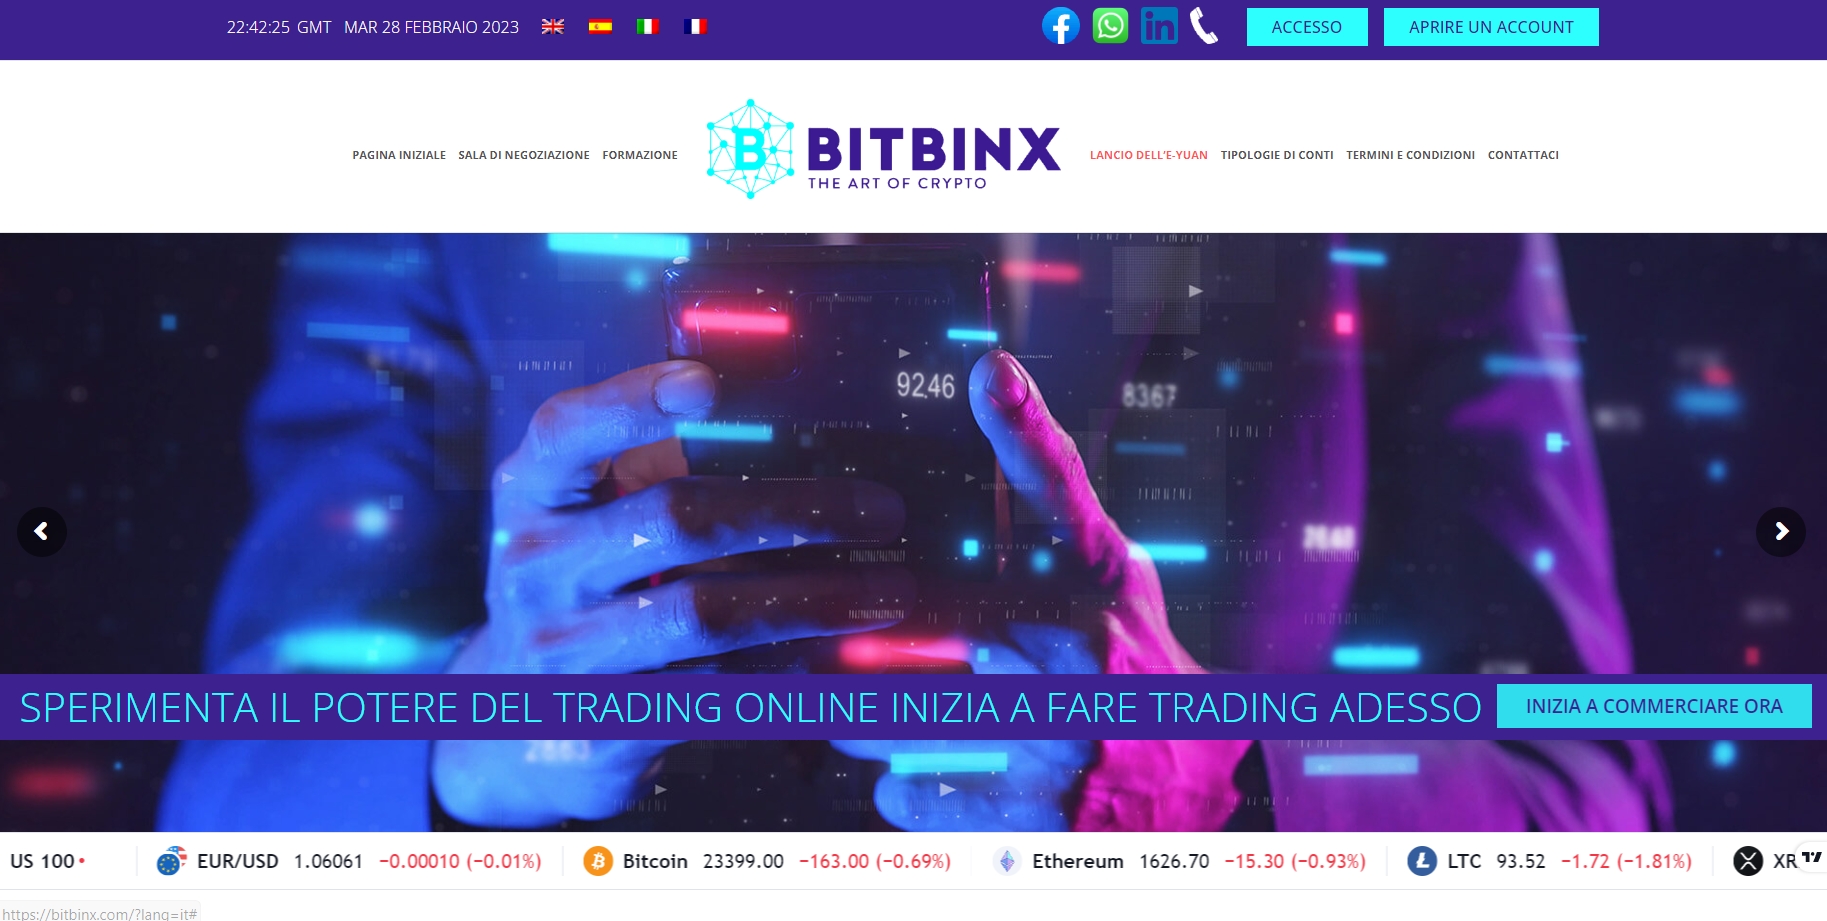 Bitbinx homepage